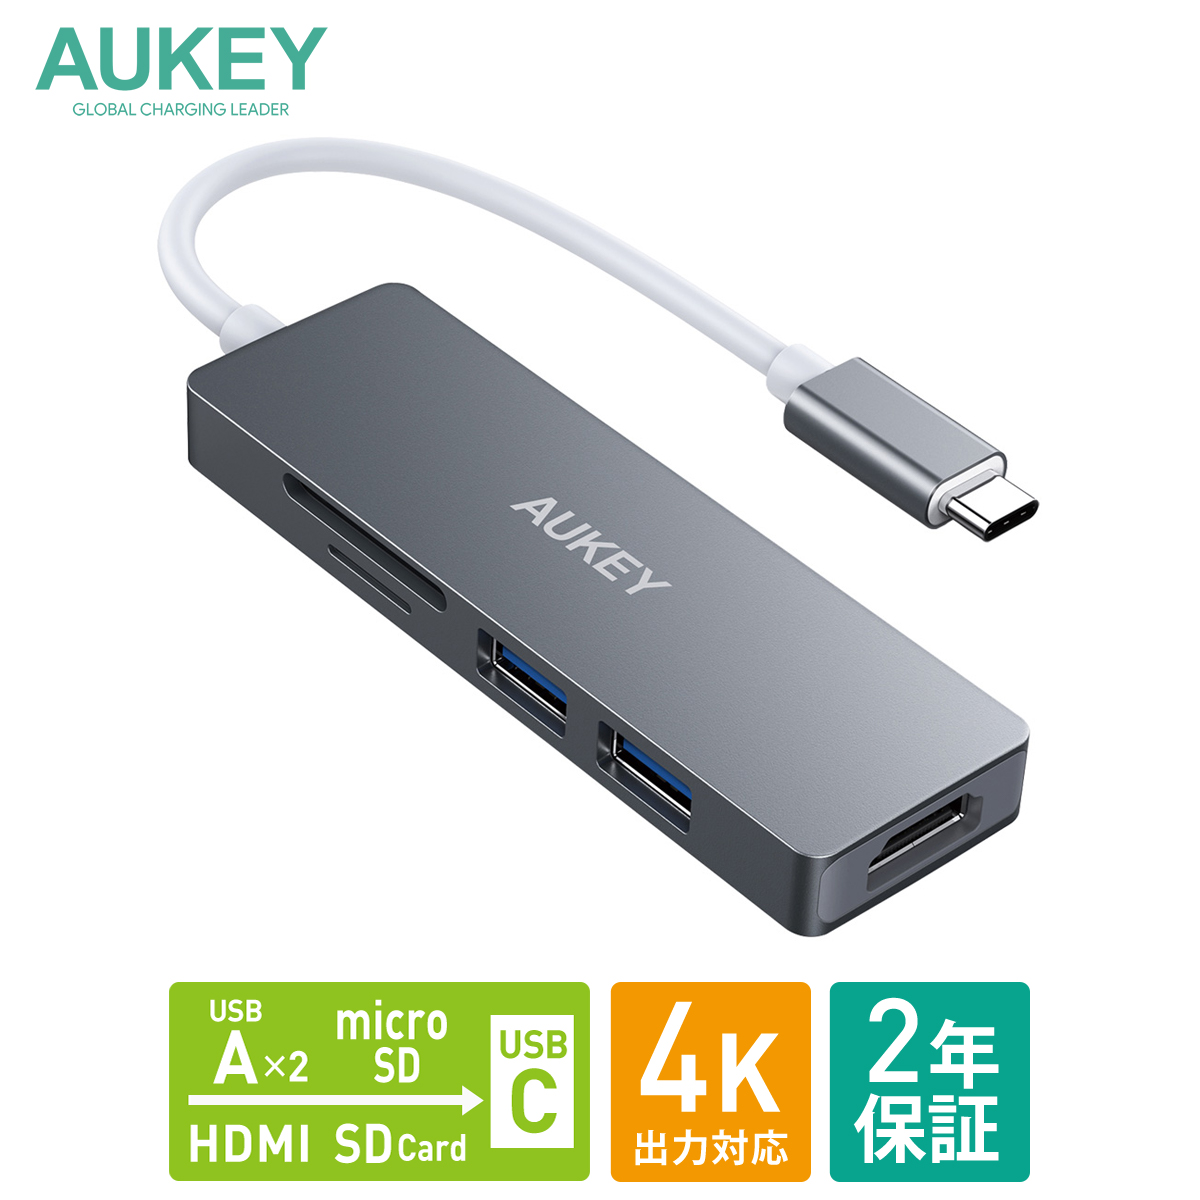 USBハブ タイプC HDMI 好評受付中 microSD スリム おしゃれ テレワーク 在宅勤務 4K 5Gbps USB3.0 type-c AUKEY 4K出力対応 オーキー 注文後の変更キャンセル返品 5-in-1 SDカード データ転送 ノートパソコン 150mm Slim グレー CB-C72-GY Unity 2年保証 Macbook